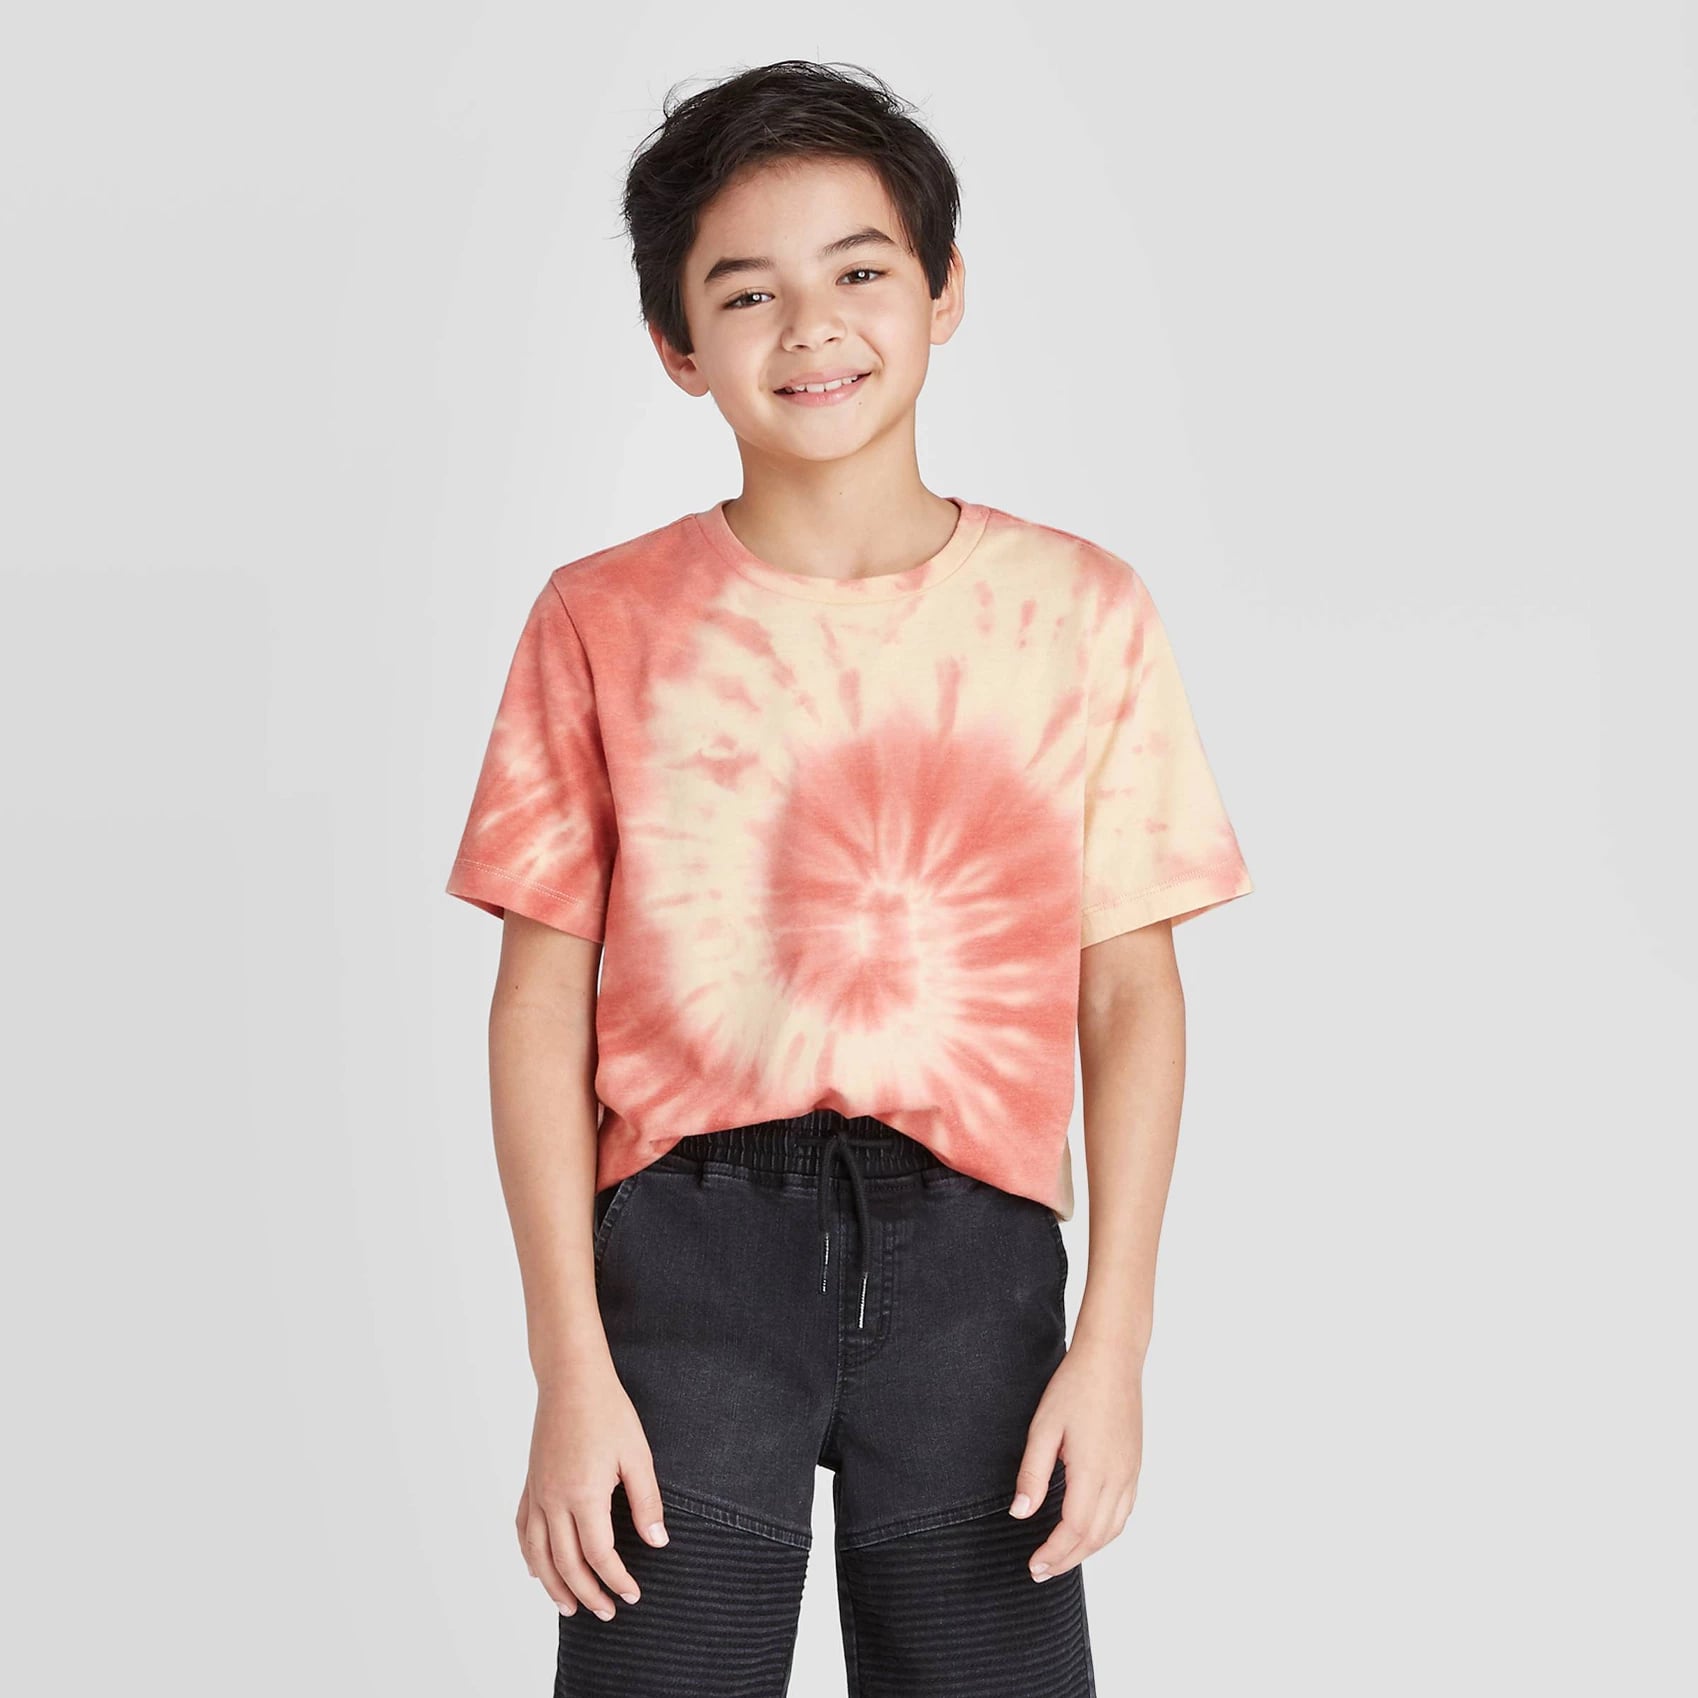 Zerototens Kids Tie-Dyed Print Hoodie Sweatshirt 6-13 Years Old Girl Boy Long Sleeve T-Shirt Pullover Casual Cotton Colorblock Tops Coat 